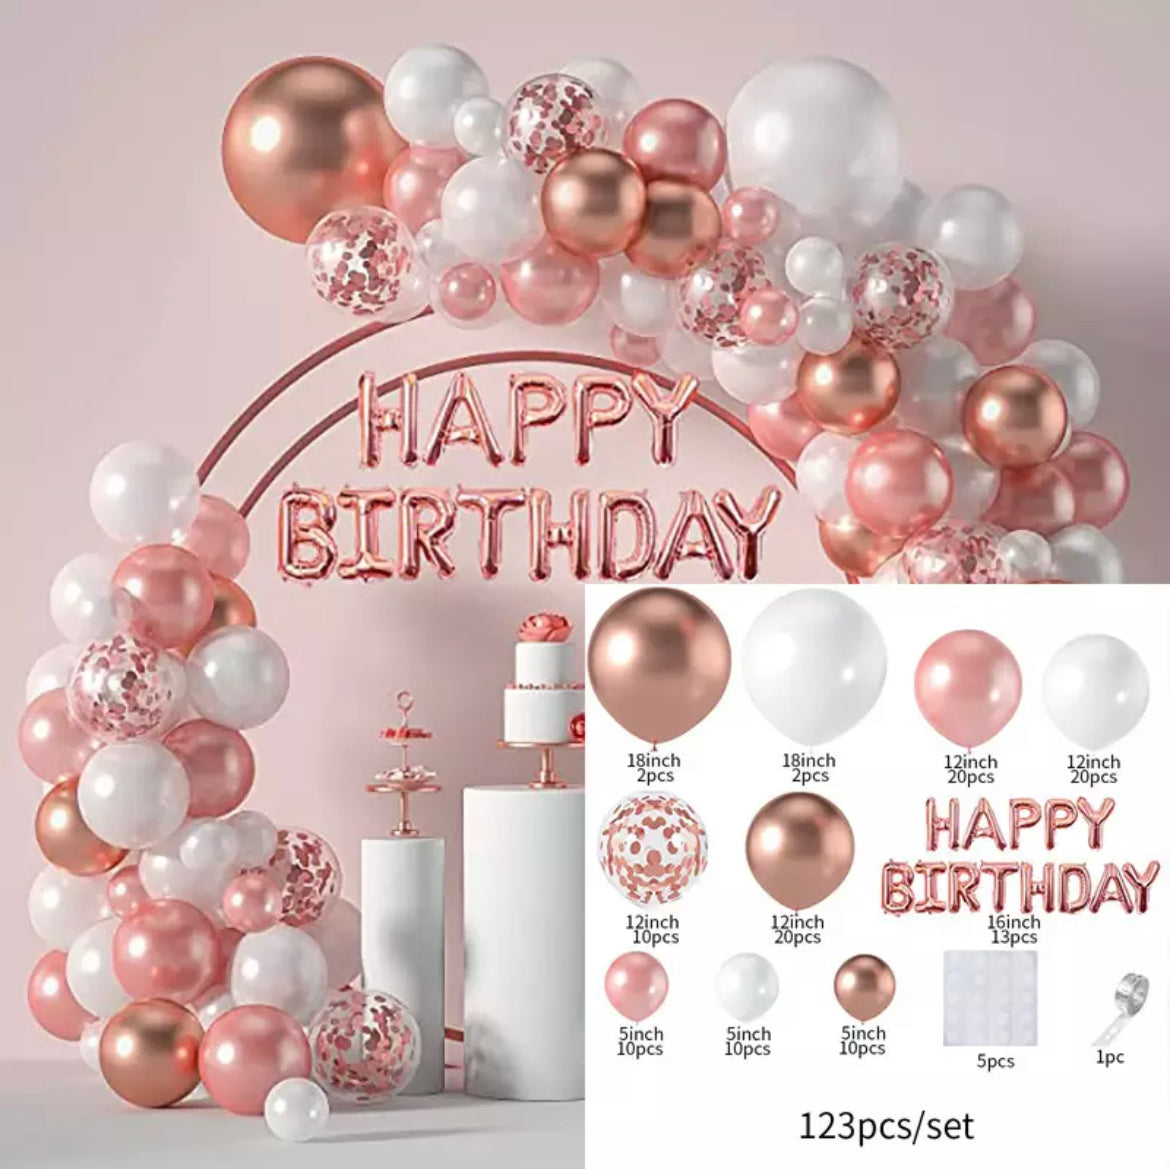 Pink and Silver Birthday Decor | Simple birthday decorations, 18th birthday  decorations, Birthday parties